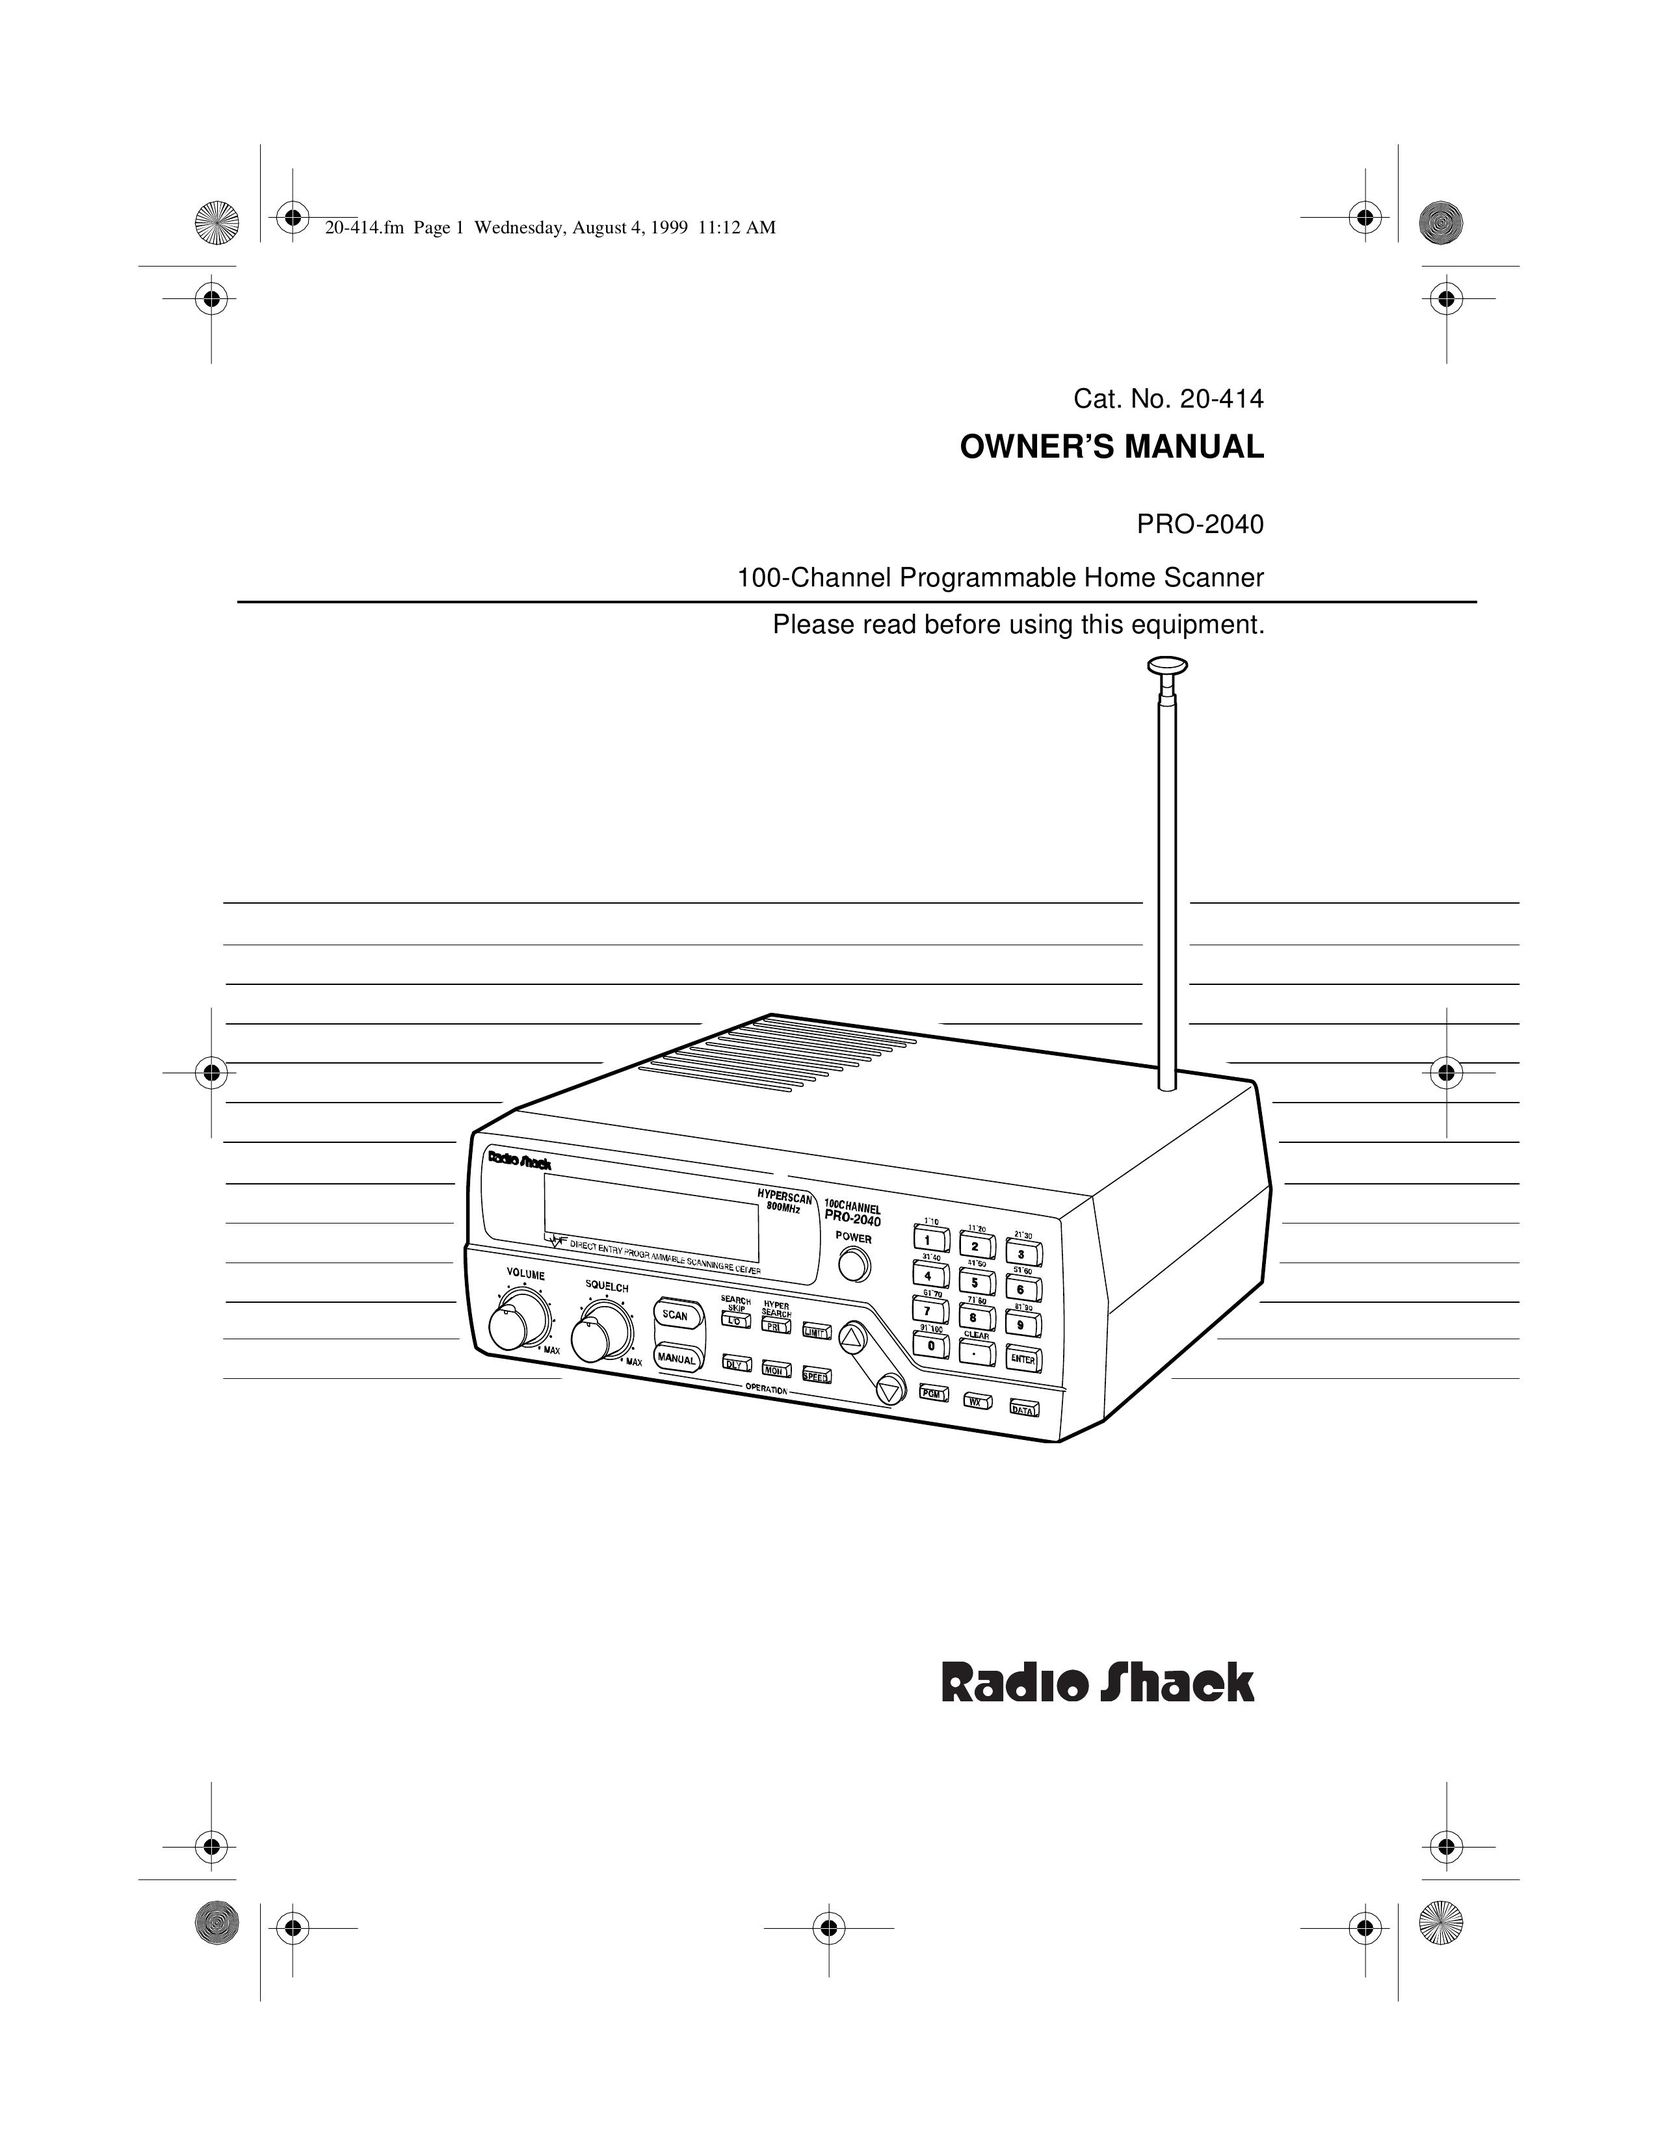 Radio Shack PRO-2040 Scanner User Manual